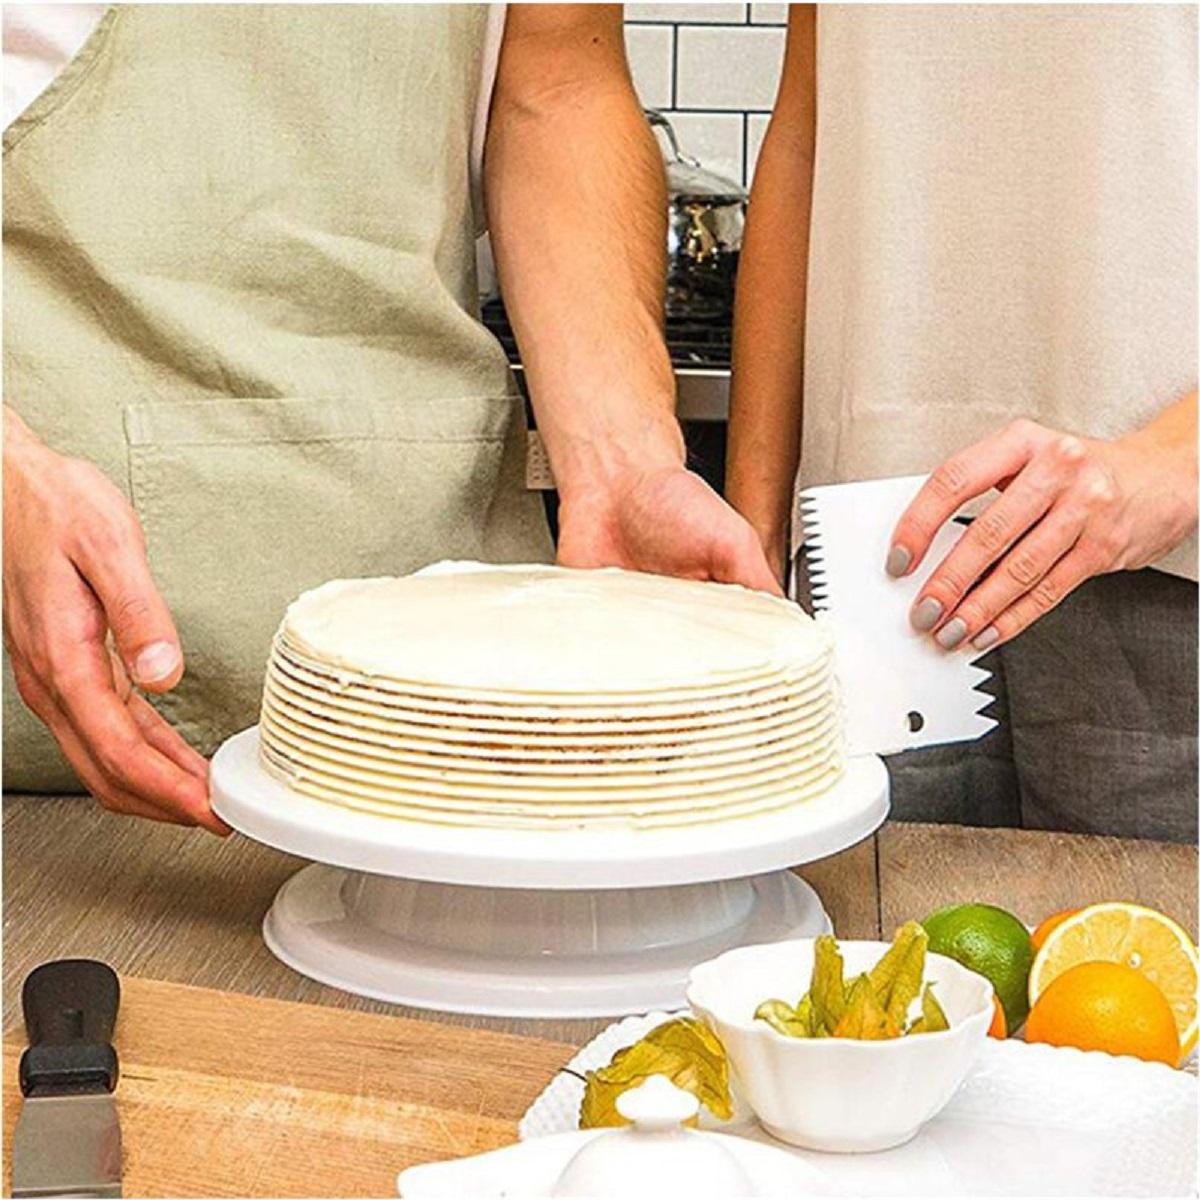 6pcs-cake Decorating Supplies Cake Turntable Rotating Cake Stand Diy Set  Baking Tools Spatula Scraper